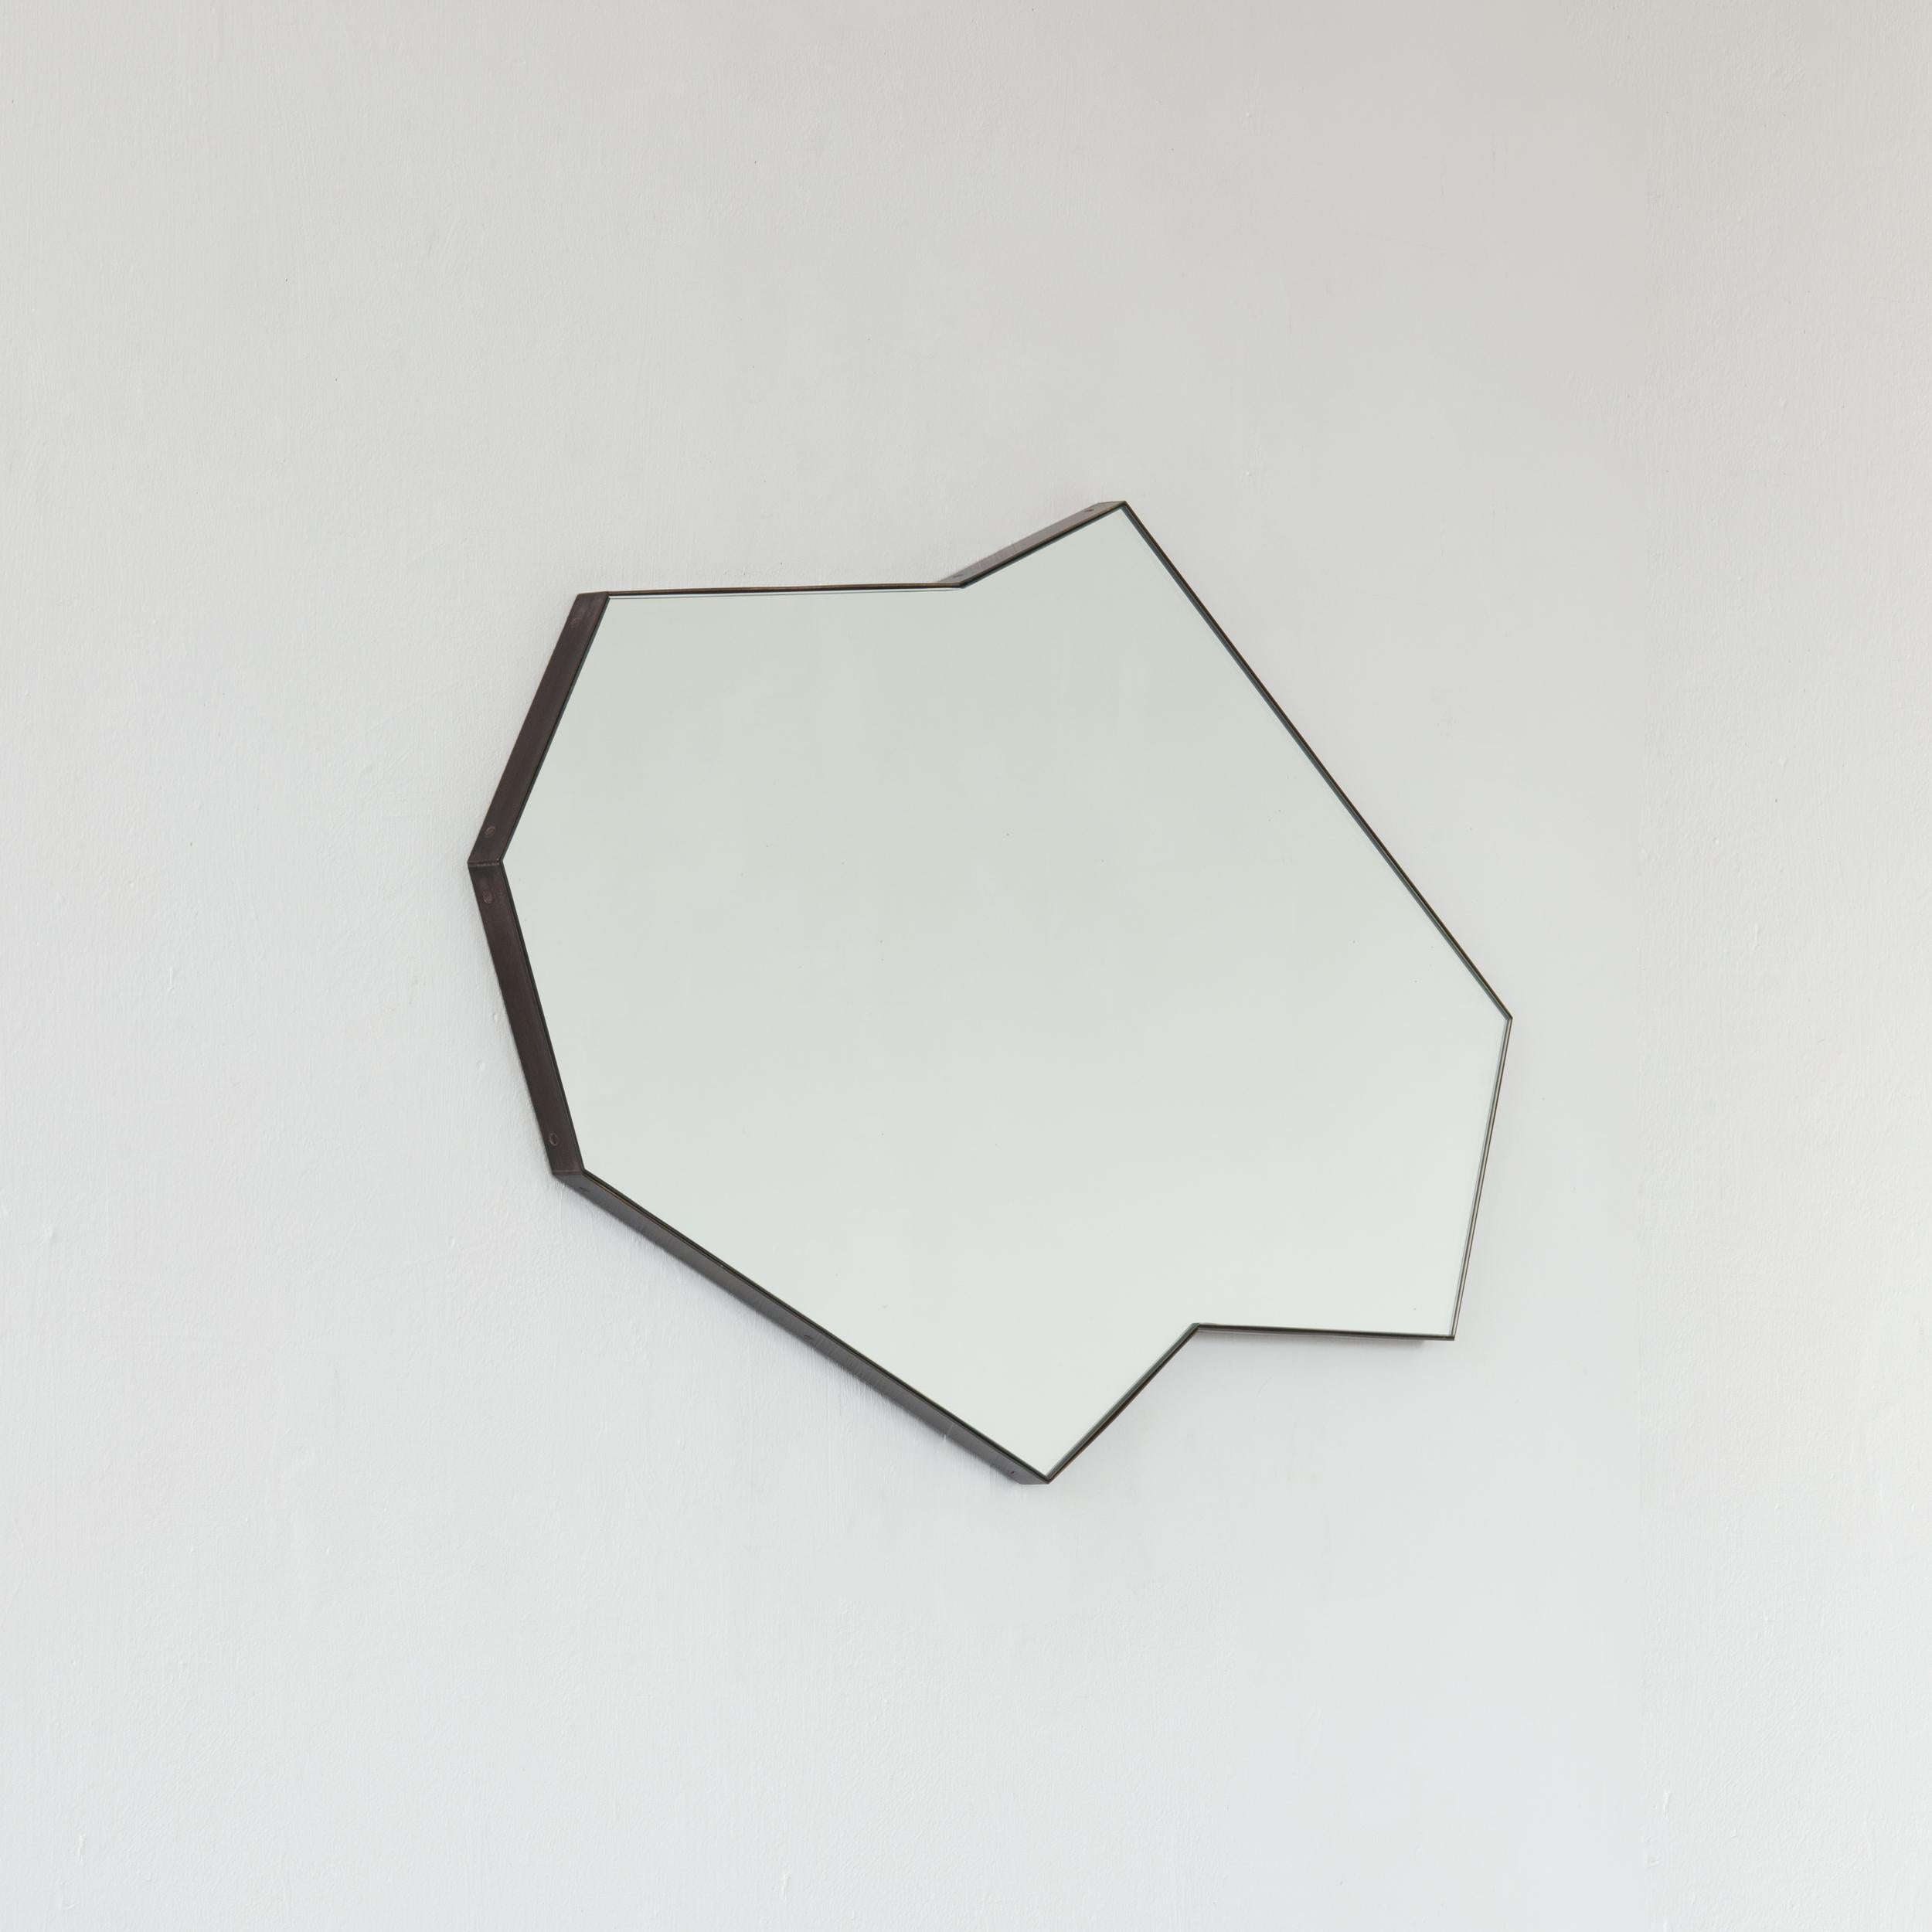 Octagon Bapa Irregular shaped Art Deco Mirror with Bronze Patina Frame For Sale 3